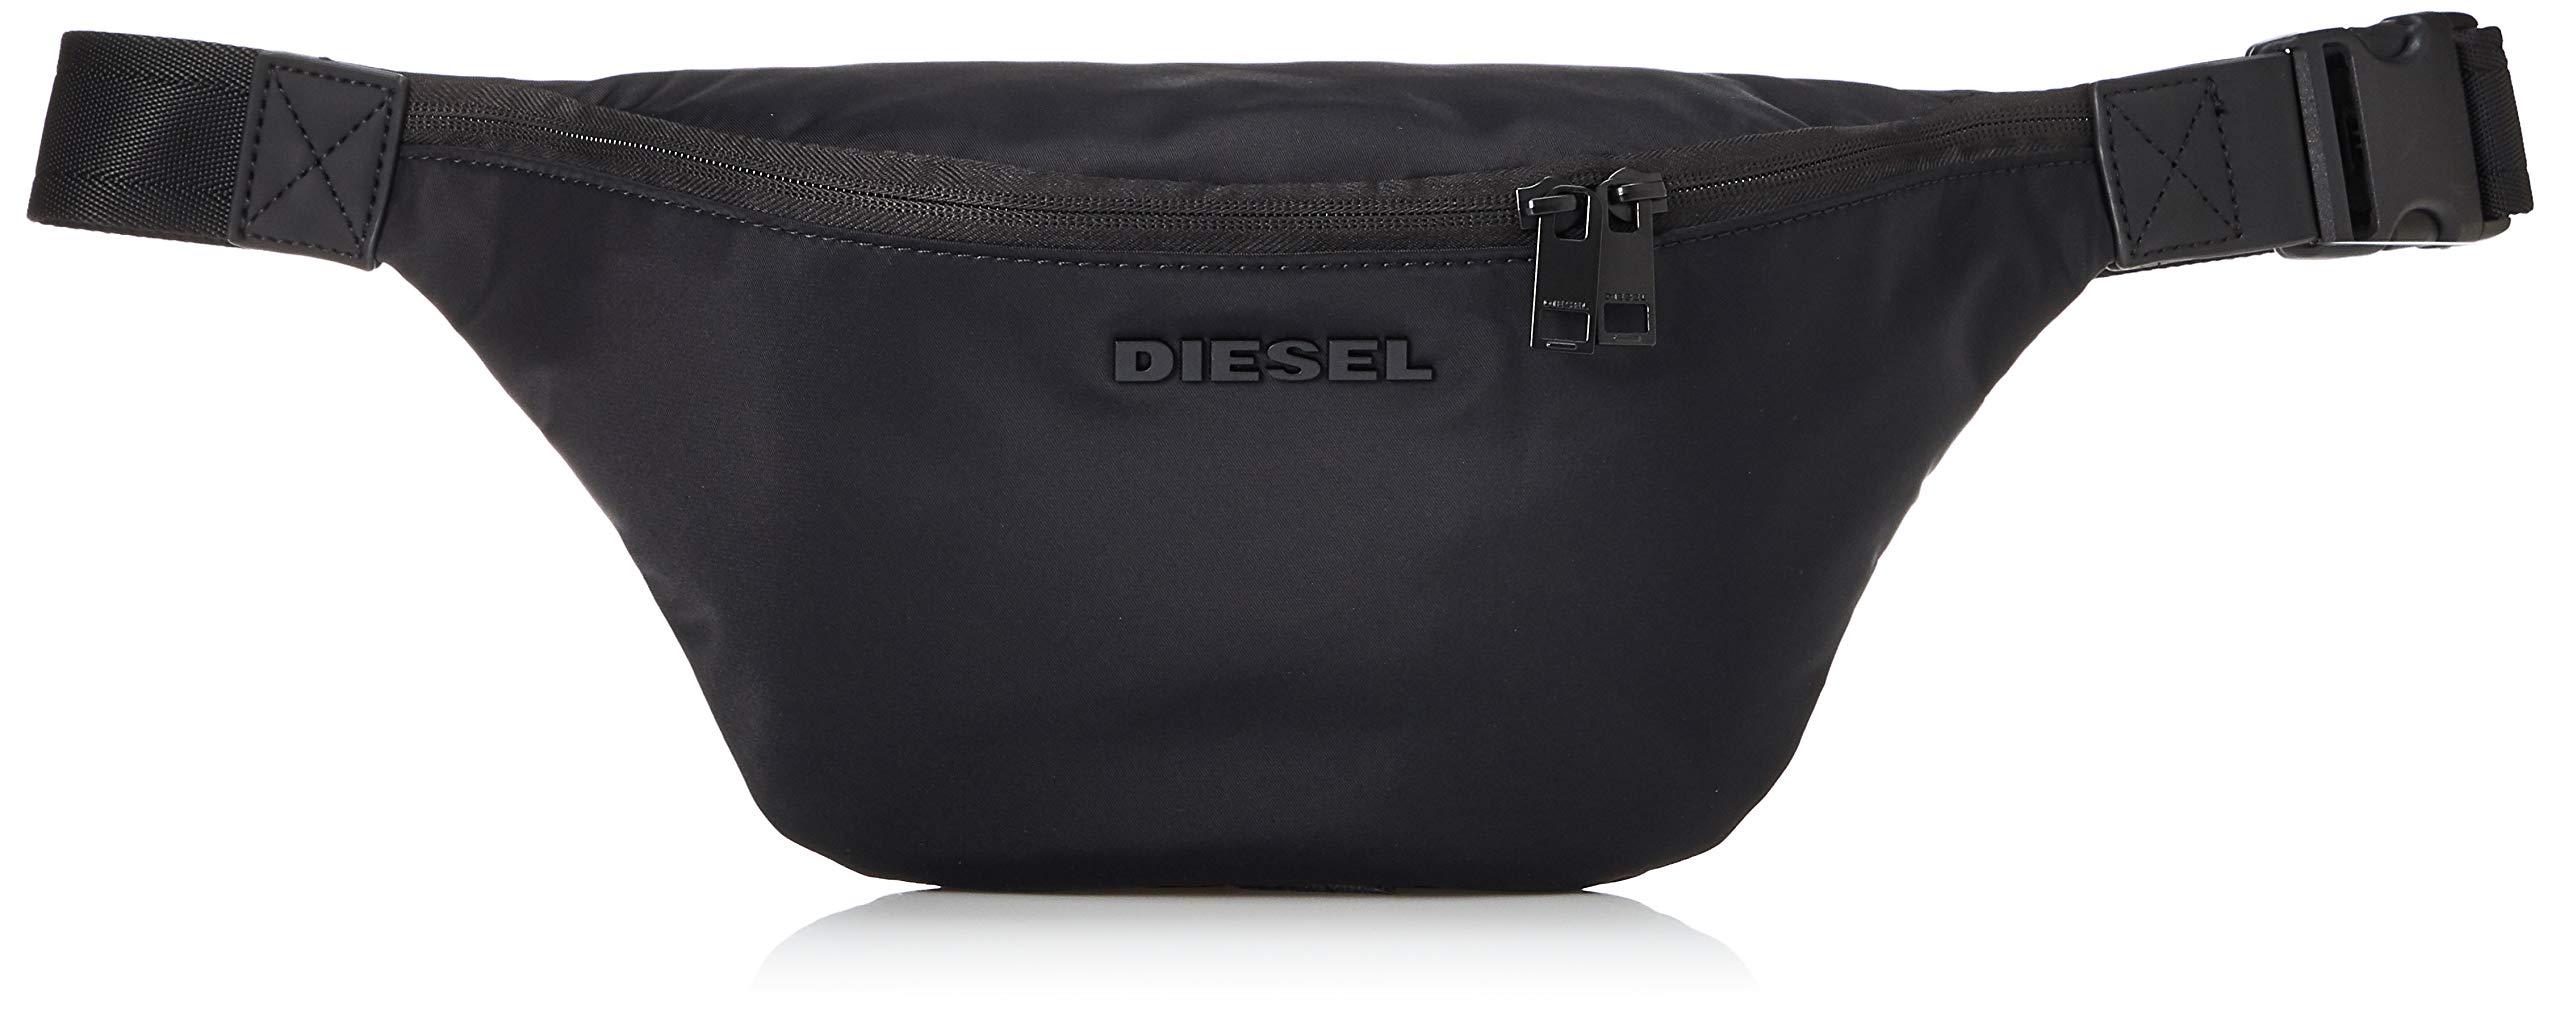 DIESEL Orys F-suse Dm Belt Bag in Black (Red) for Men - Lyst